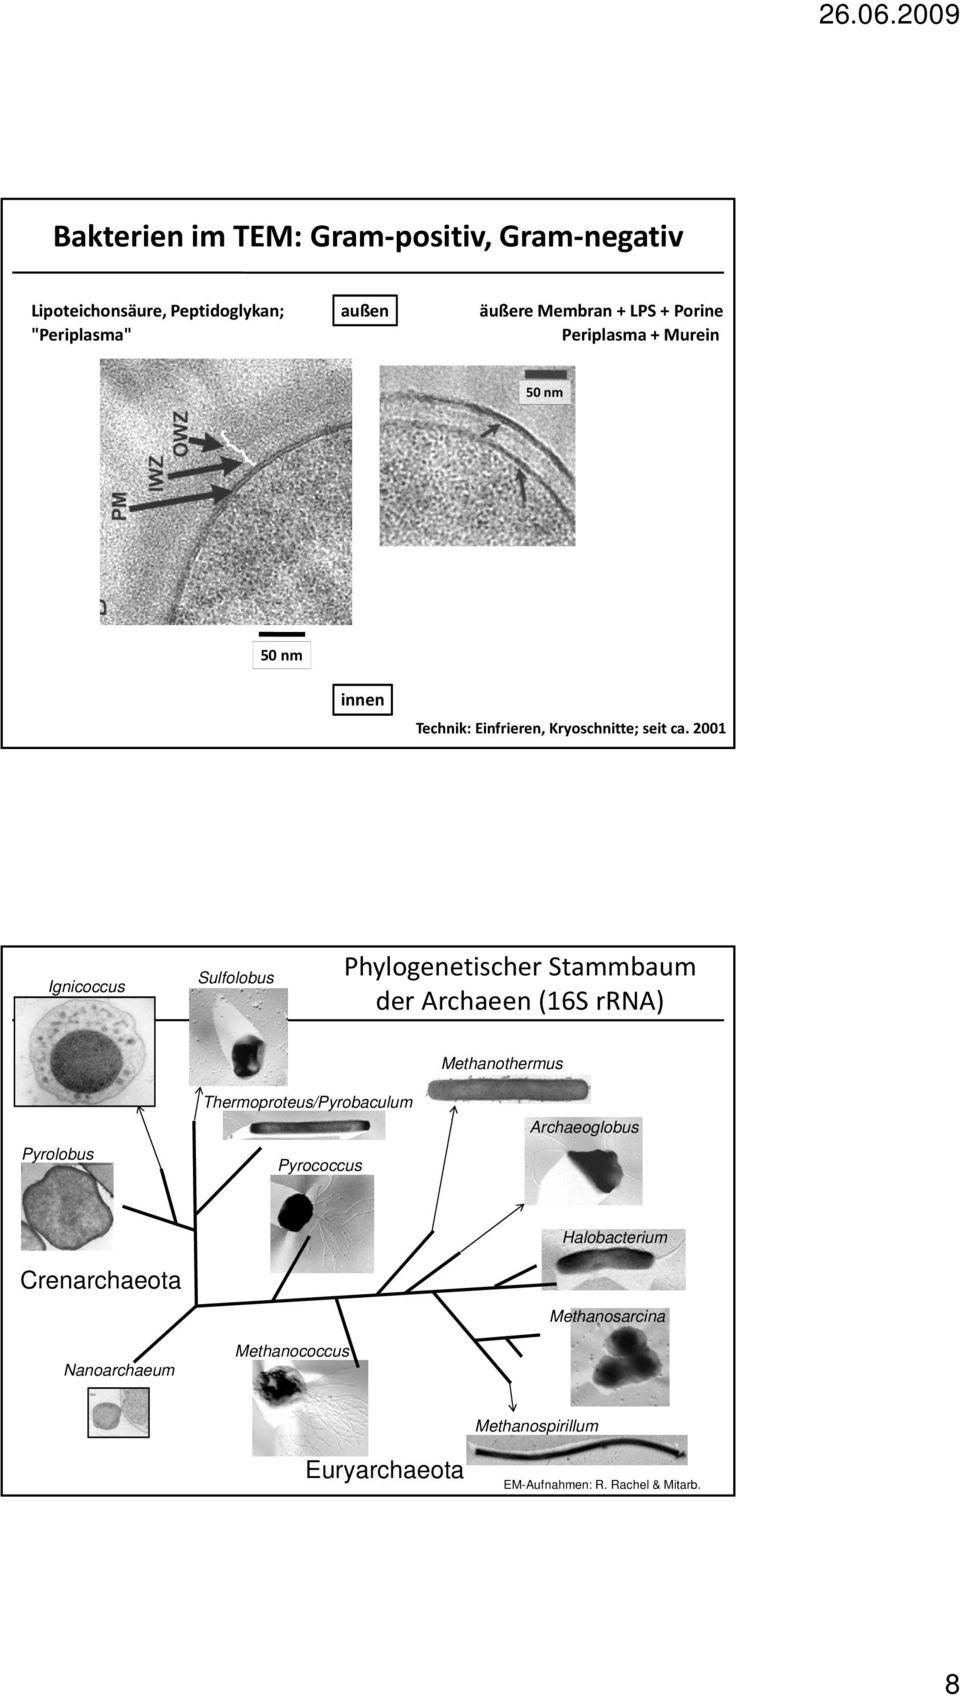 2001 Ignicoccus Sulfolobus Phylogenetischer Stammbaum der Archaeen (16S rrna) Methanothermus Pyrolobus